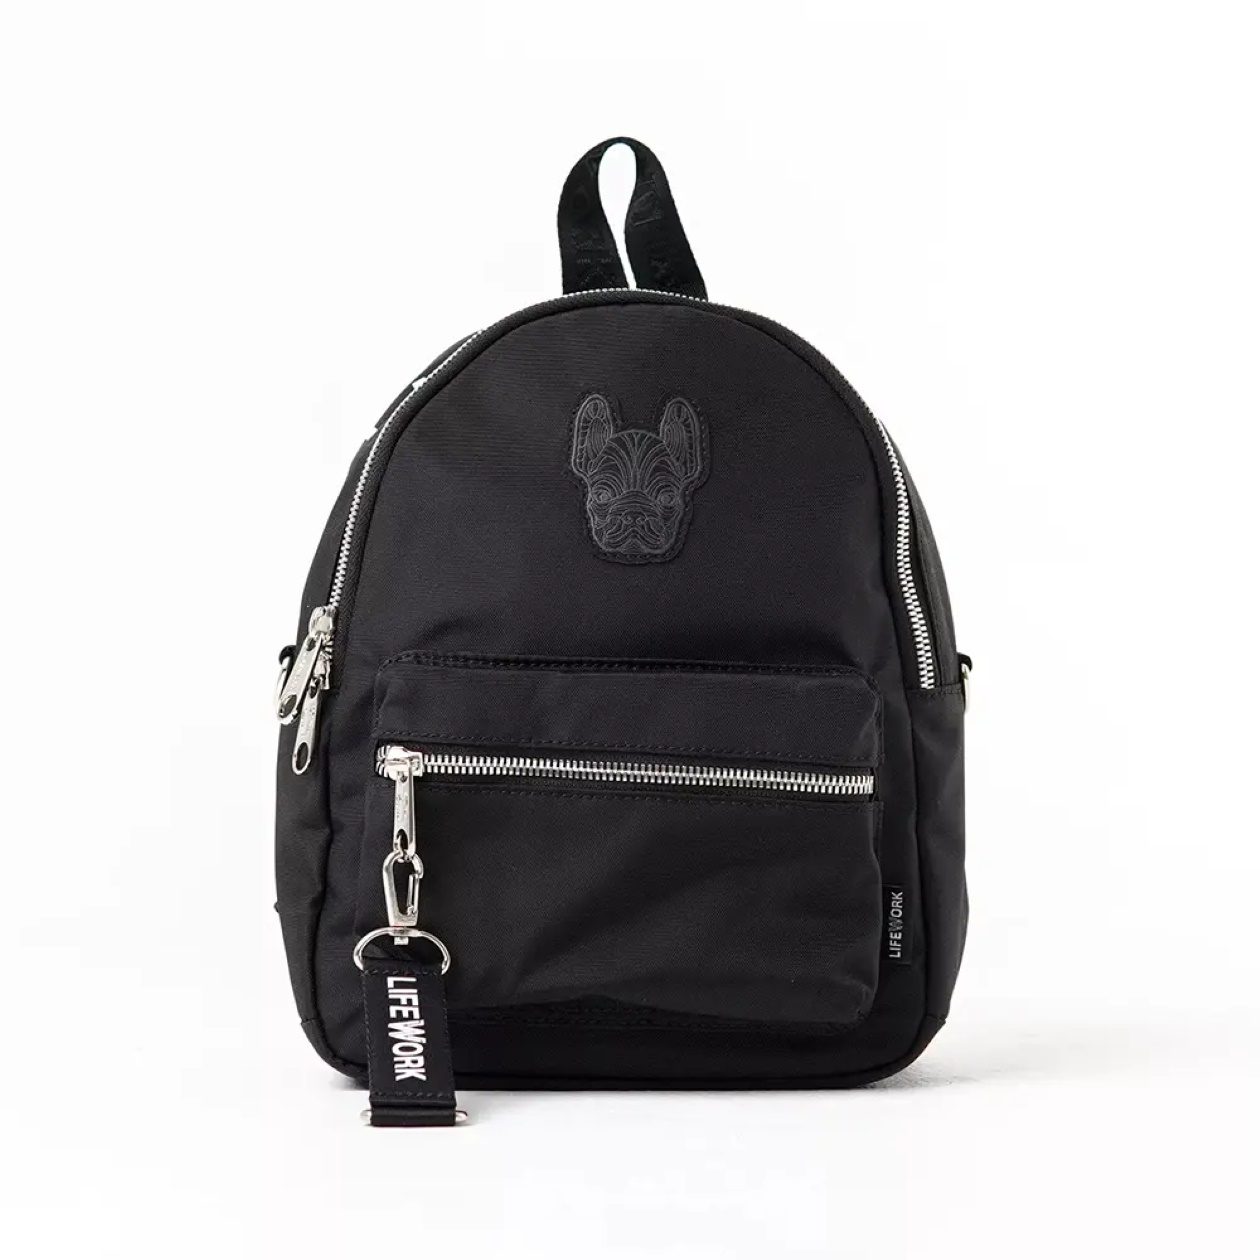 Lifework Radog Small Backpack Black